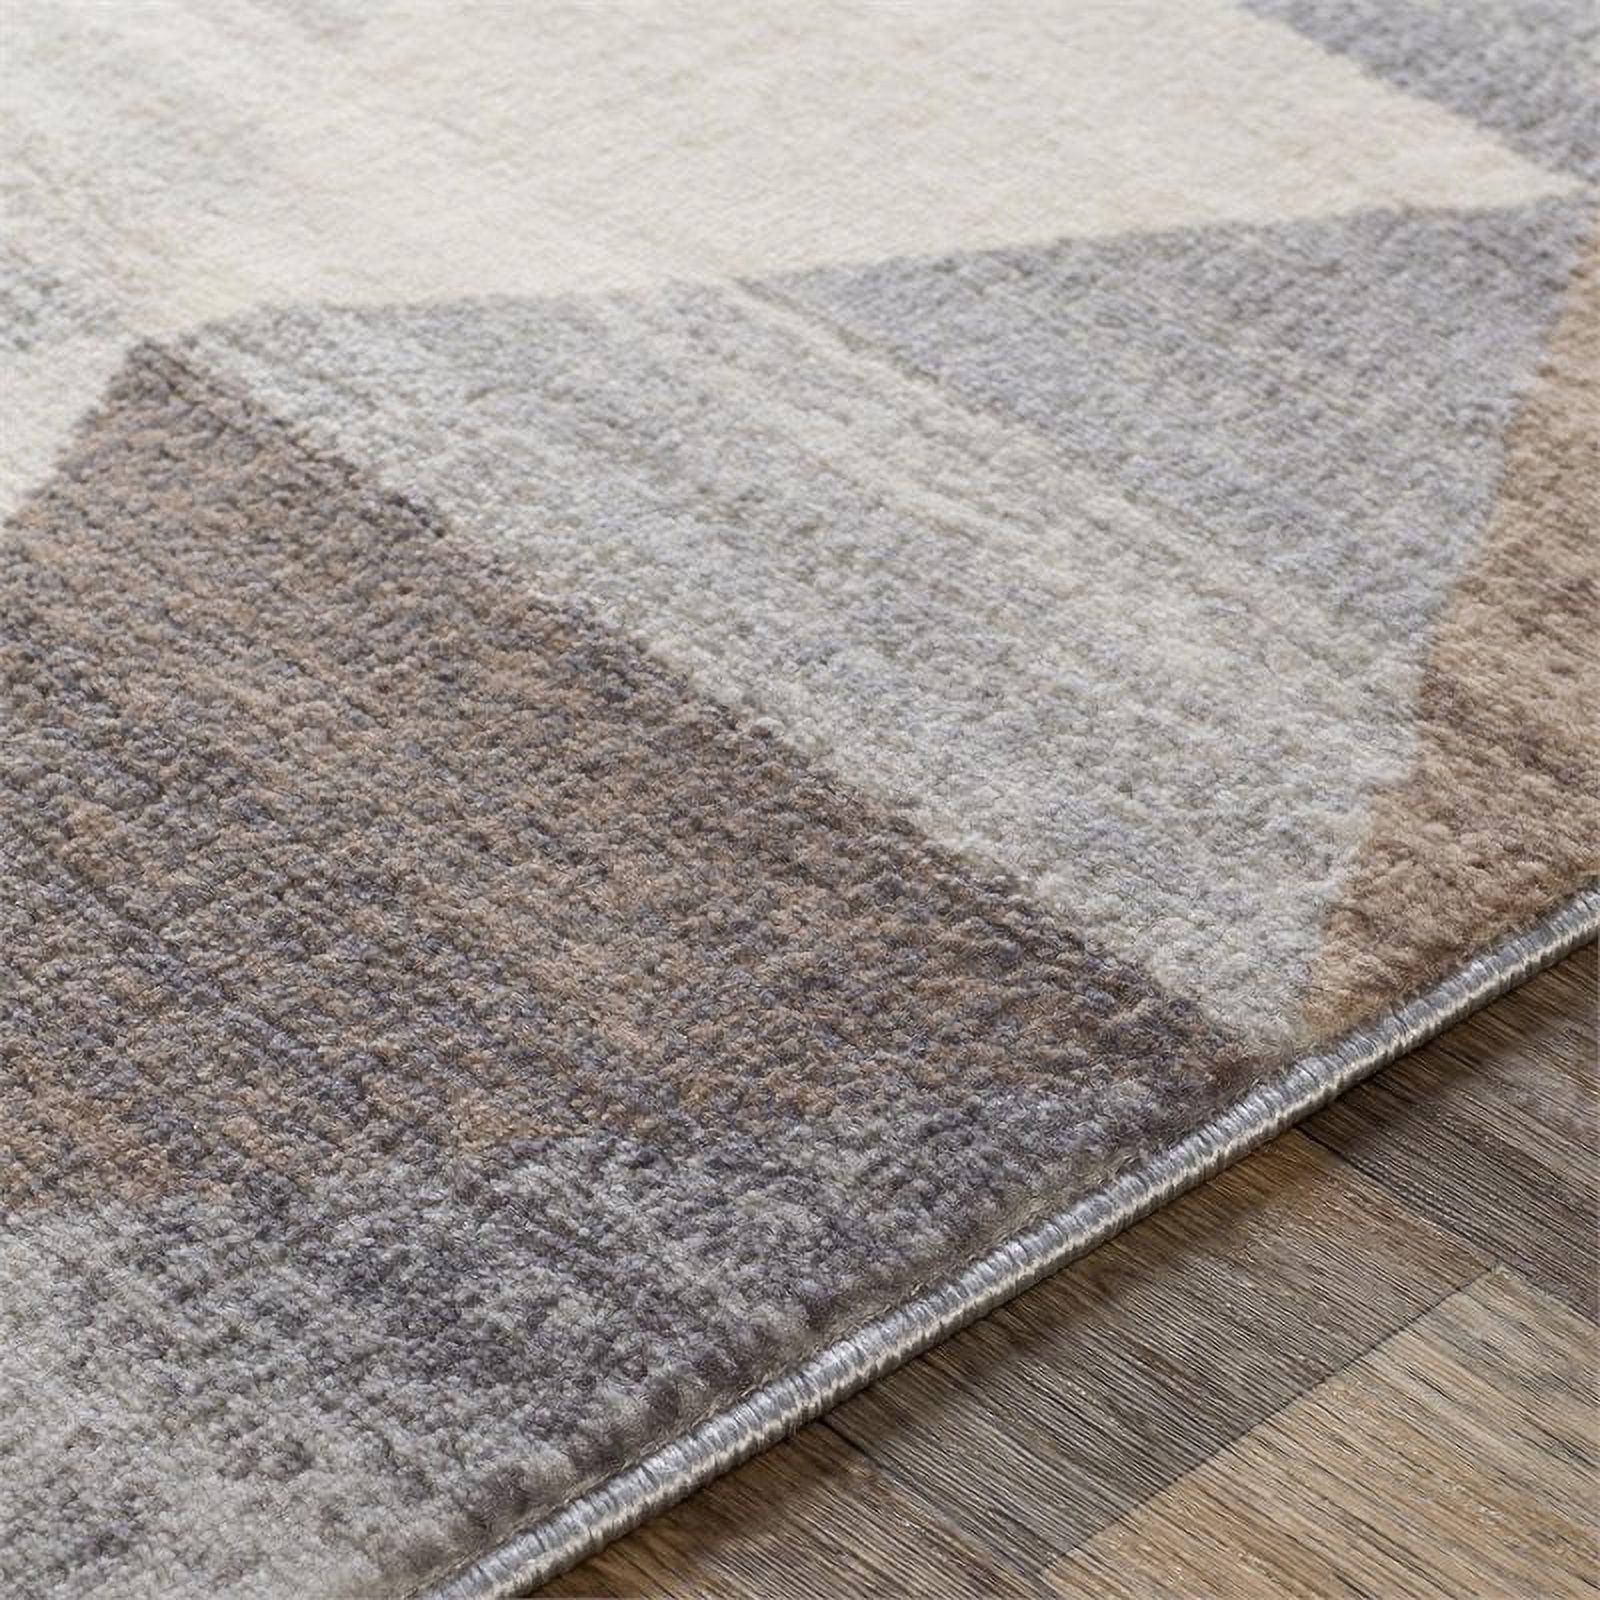 Surya Roma ROM-2303 108 x 147" Rectangle Modern Fabric Rug in Gray/Charcoal/Tan - image 4 of 7